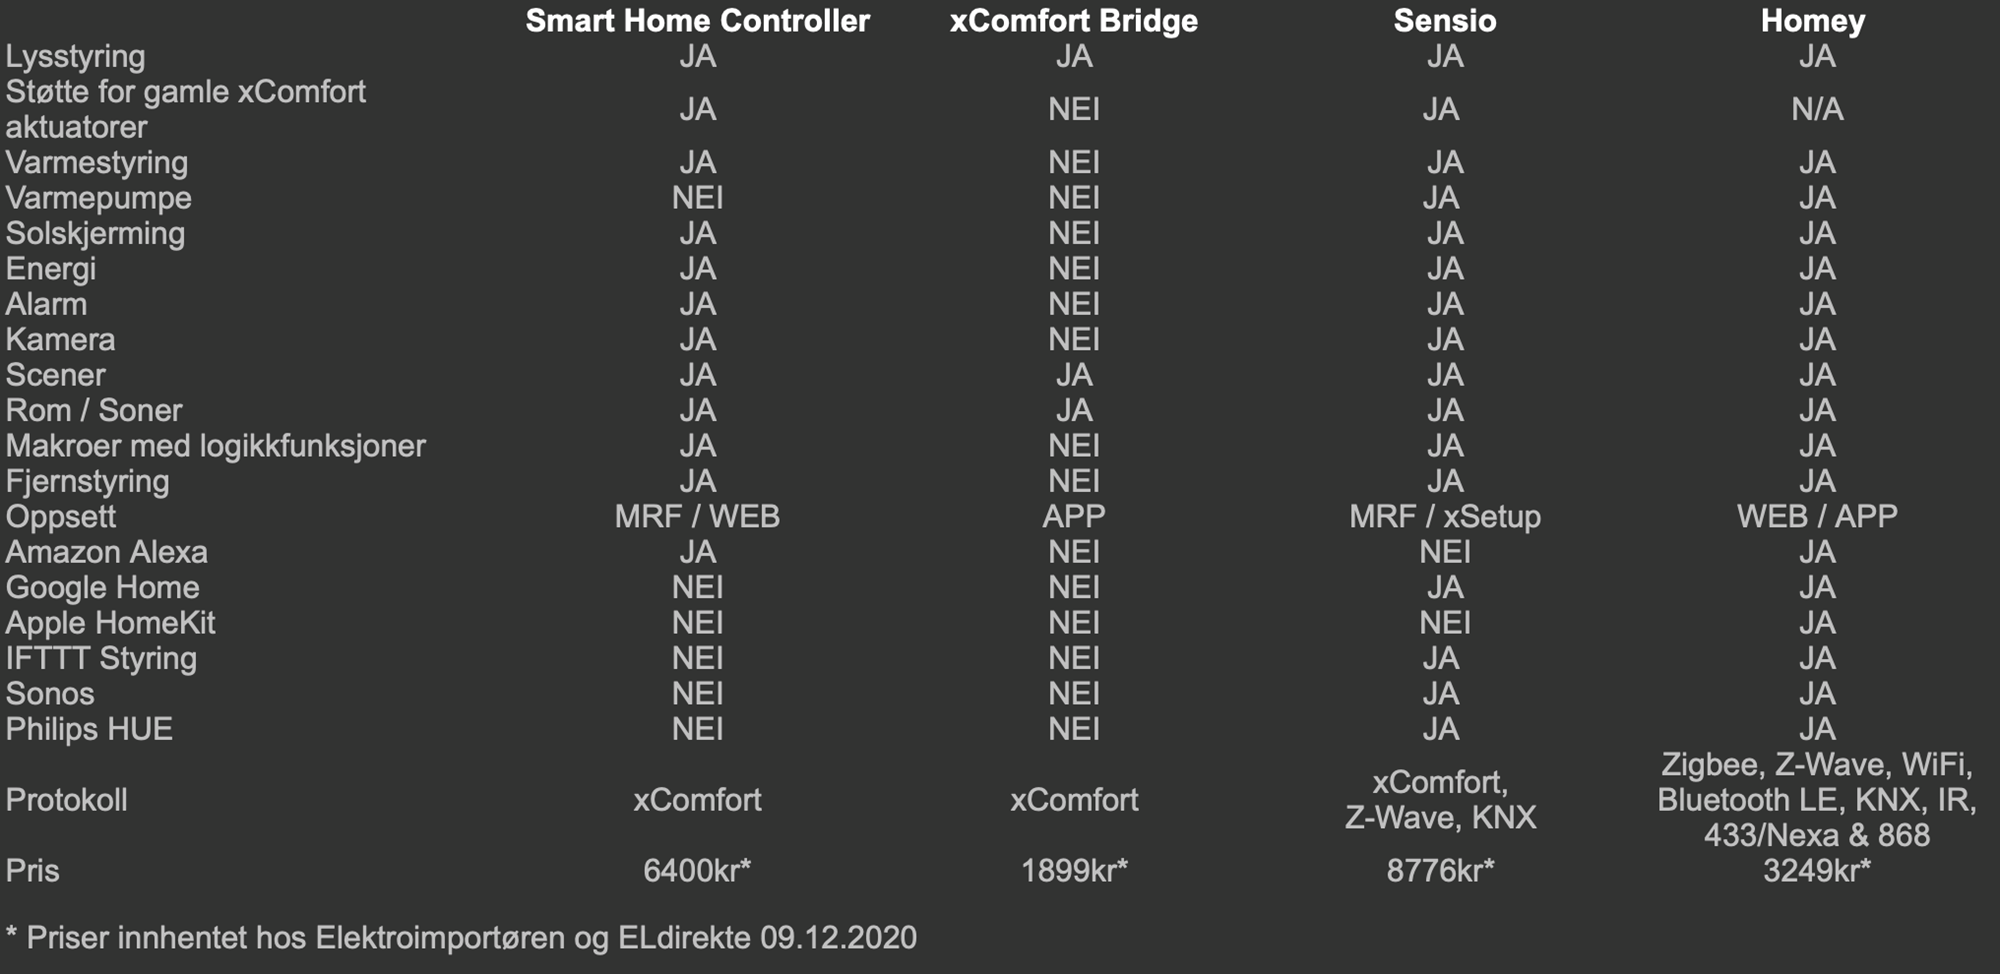 xComfort SHC eller Sensio X1 - Screenshot 2021-02-16 at 00.20.01.png - PappaOvland